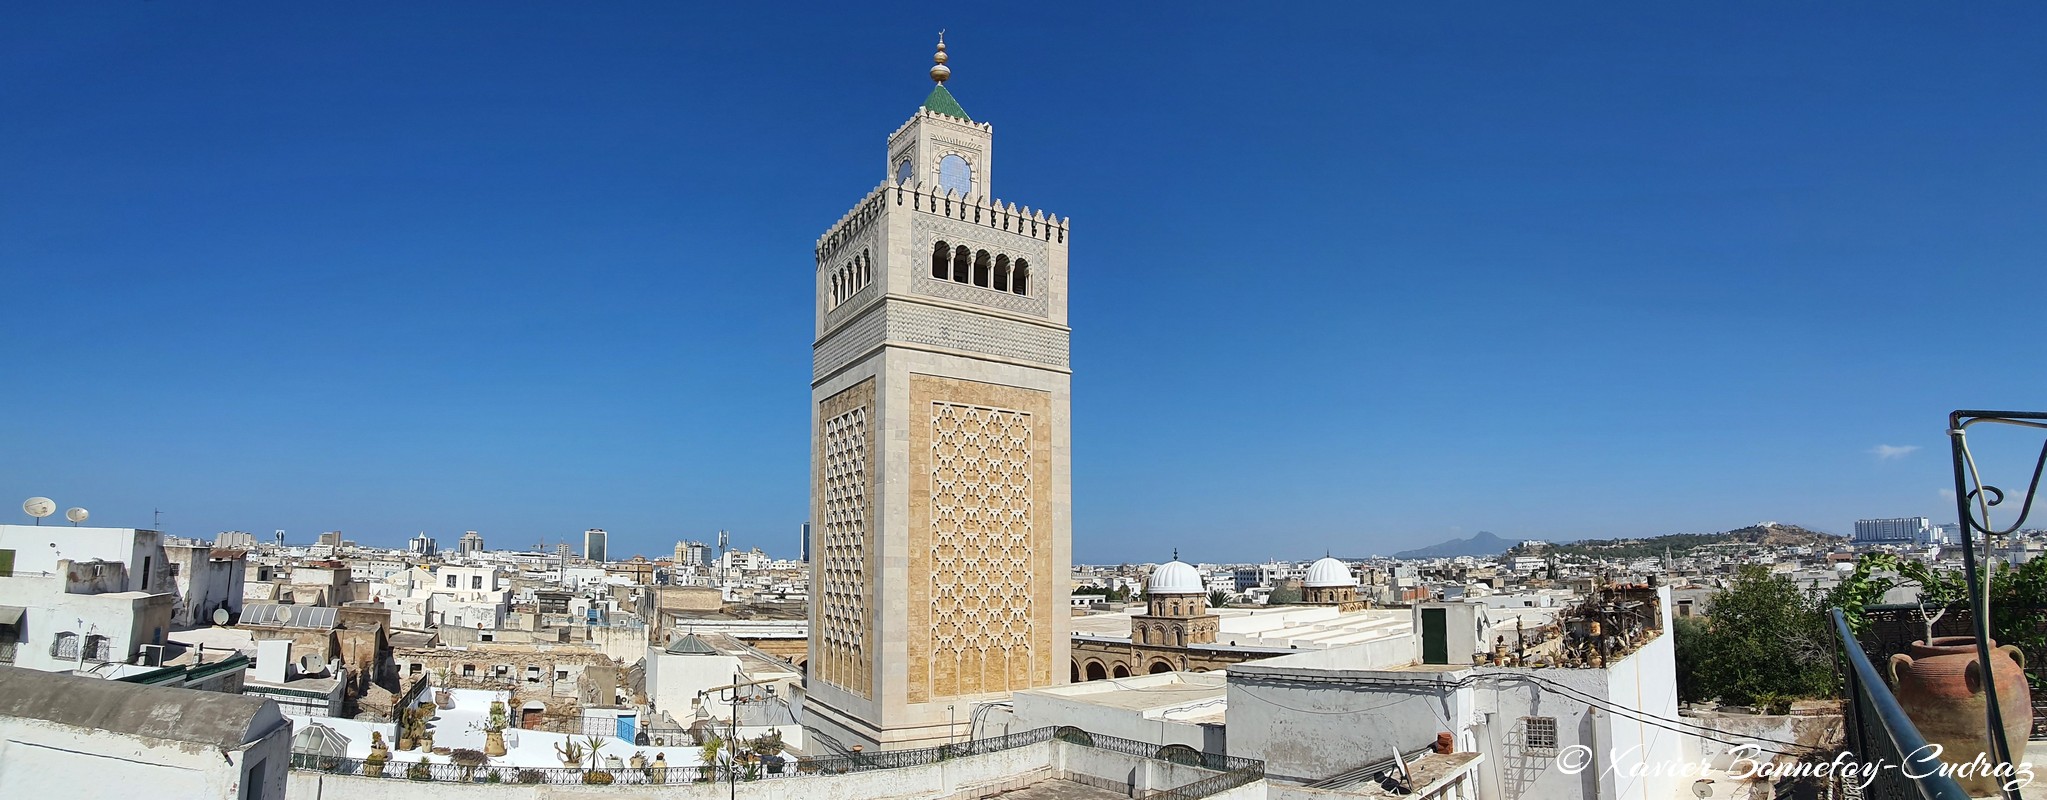 Tunis - Medina - Mosquee Ez-Zitouna
Mots-clés: geo:lat=36.79739965 geo:lon=10.17031114 geotagged La Kasbah TUN Tunisie Tunis Medina patrimoine unesco Mosquee Ez-Zitouna Religion Mosque